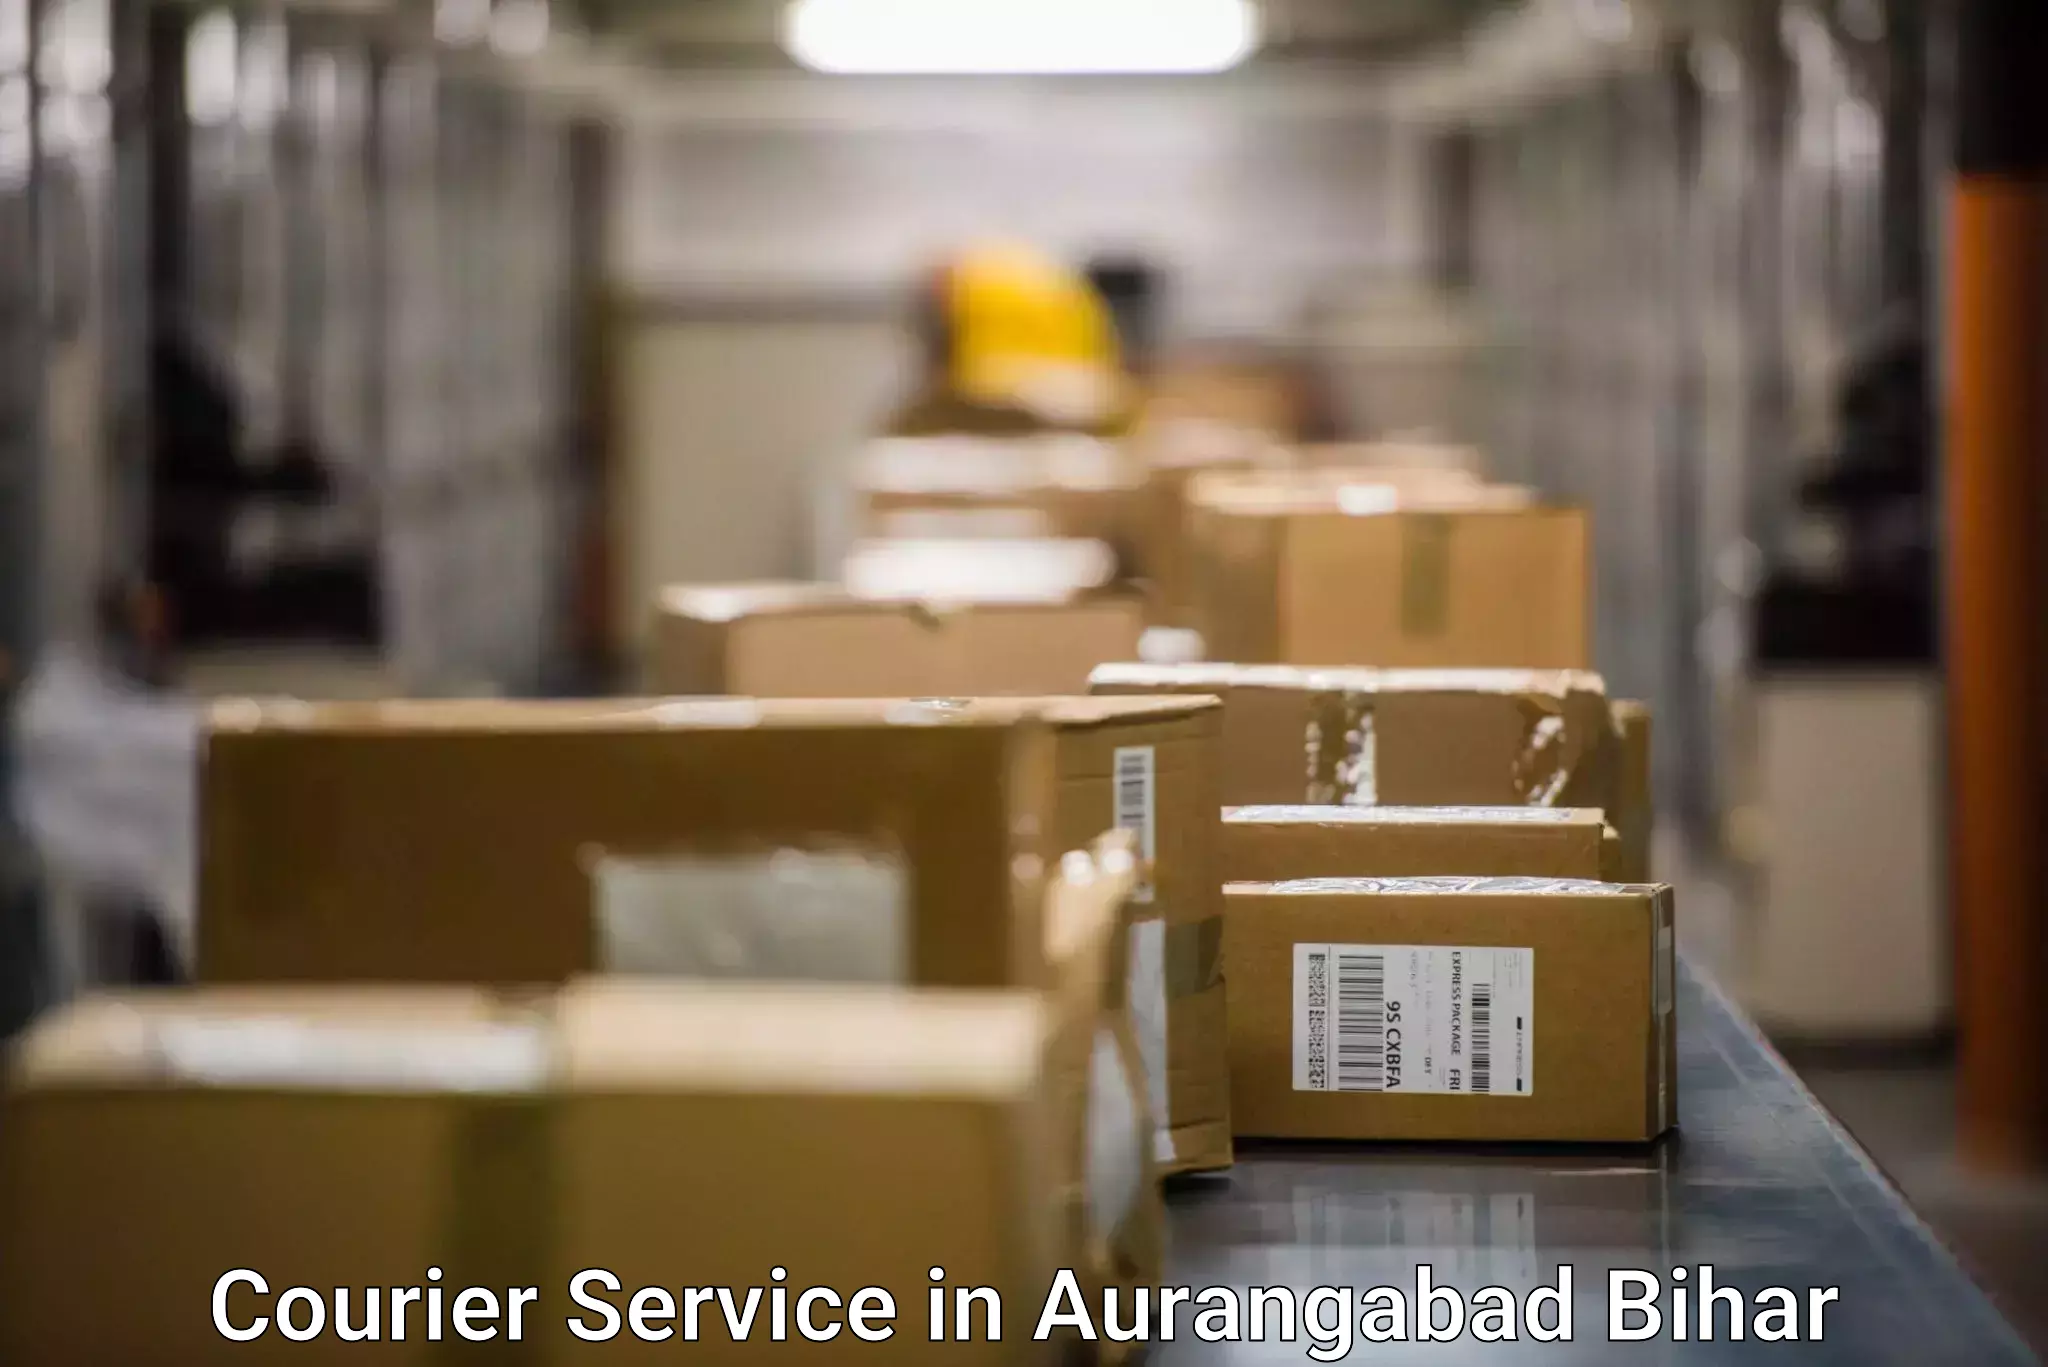 Tailored shipping plans in Aurangabad Bihar